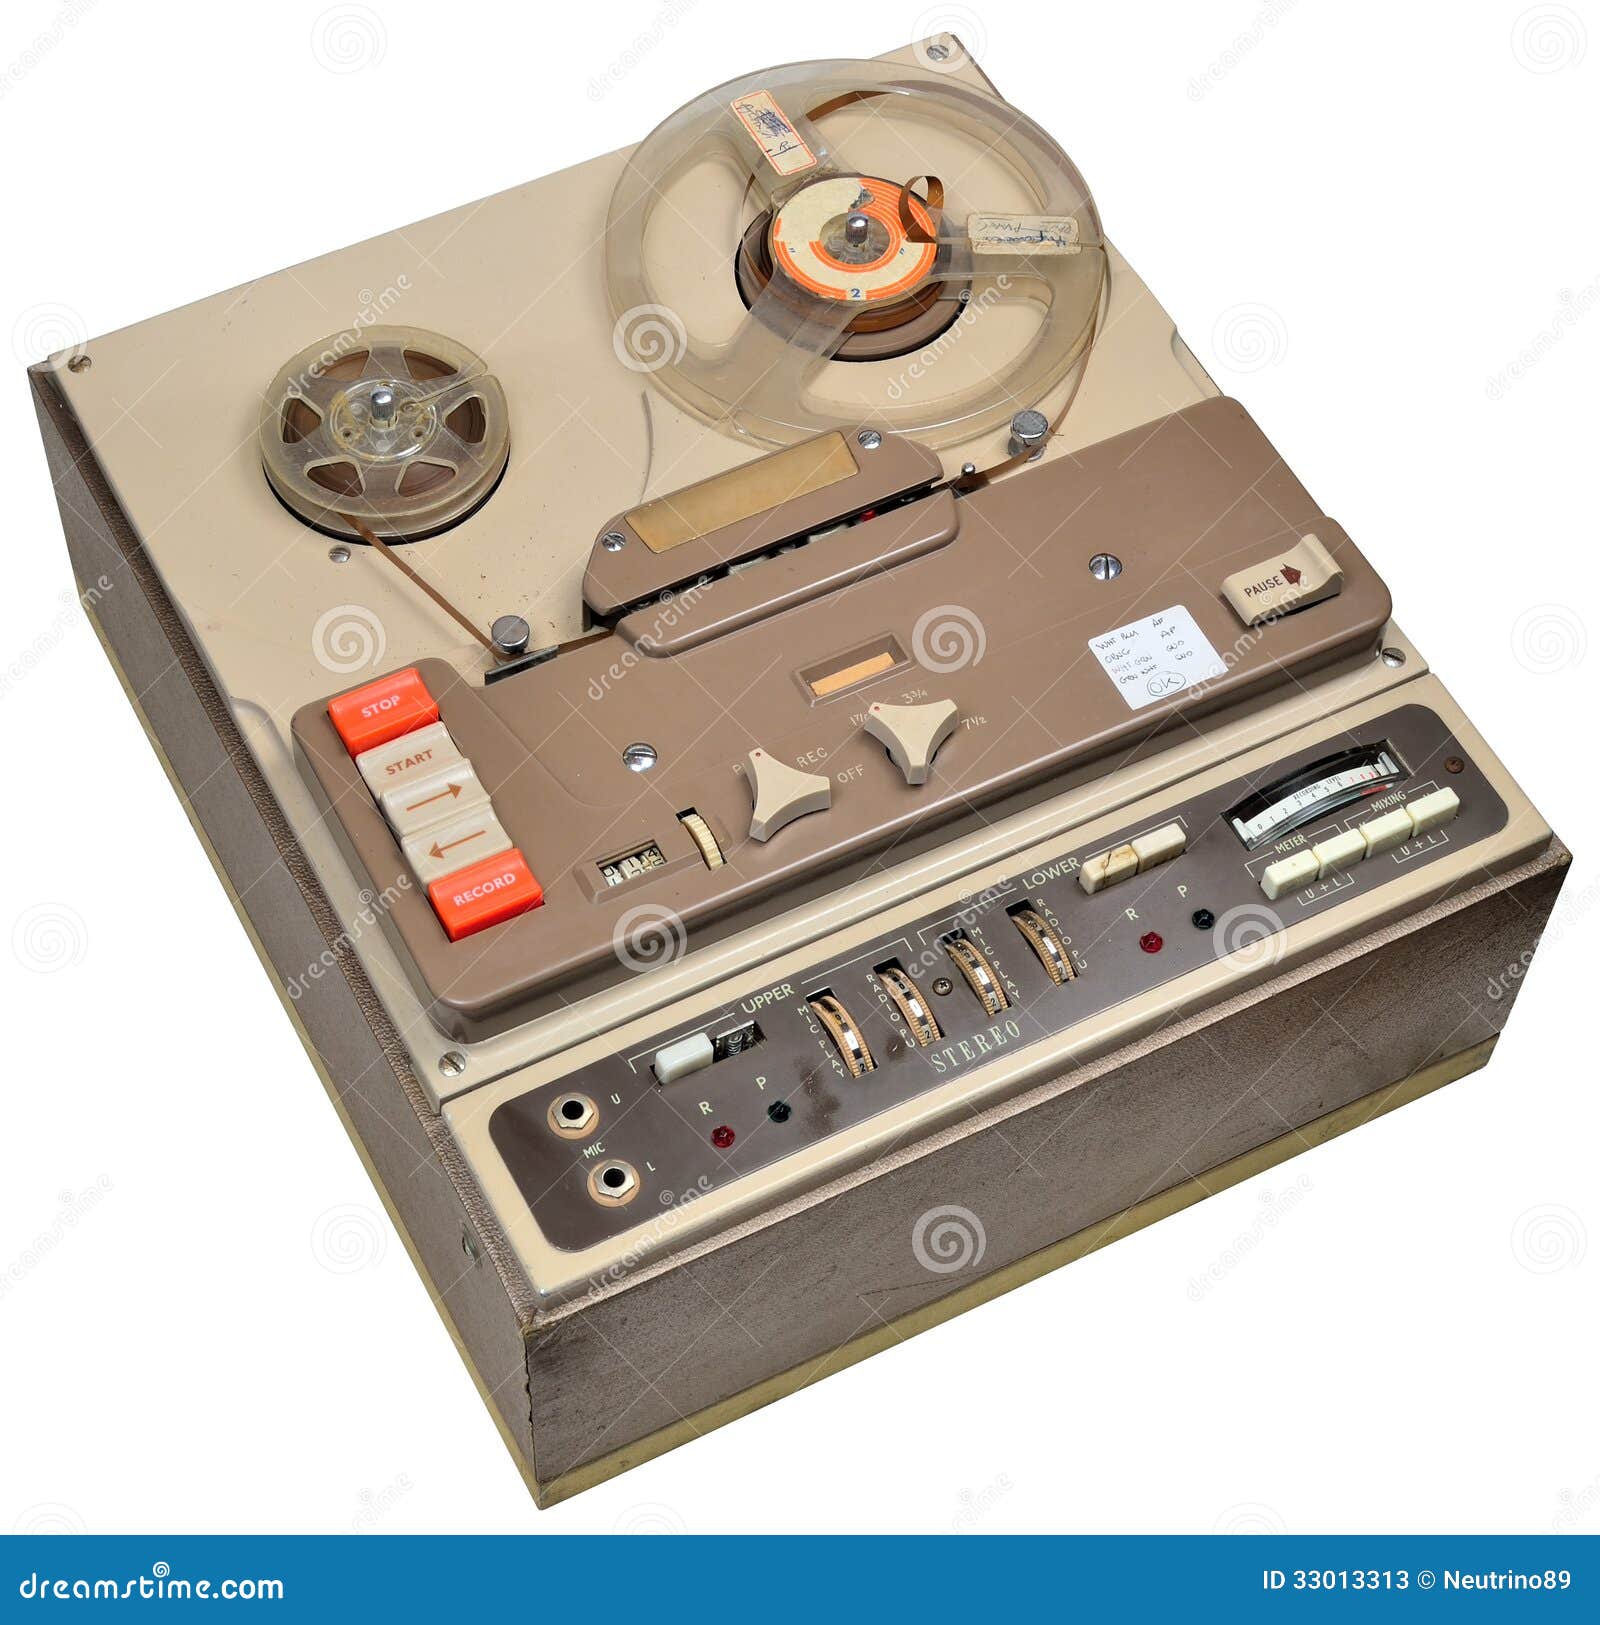 Reel to reel tape recorder stock image. Image of vacuum - 33013313